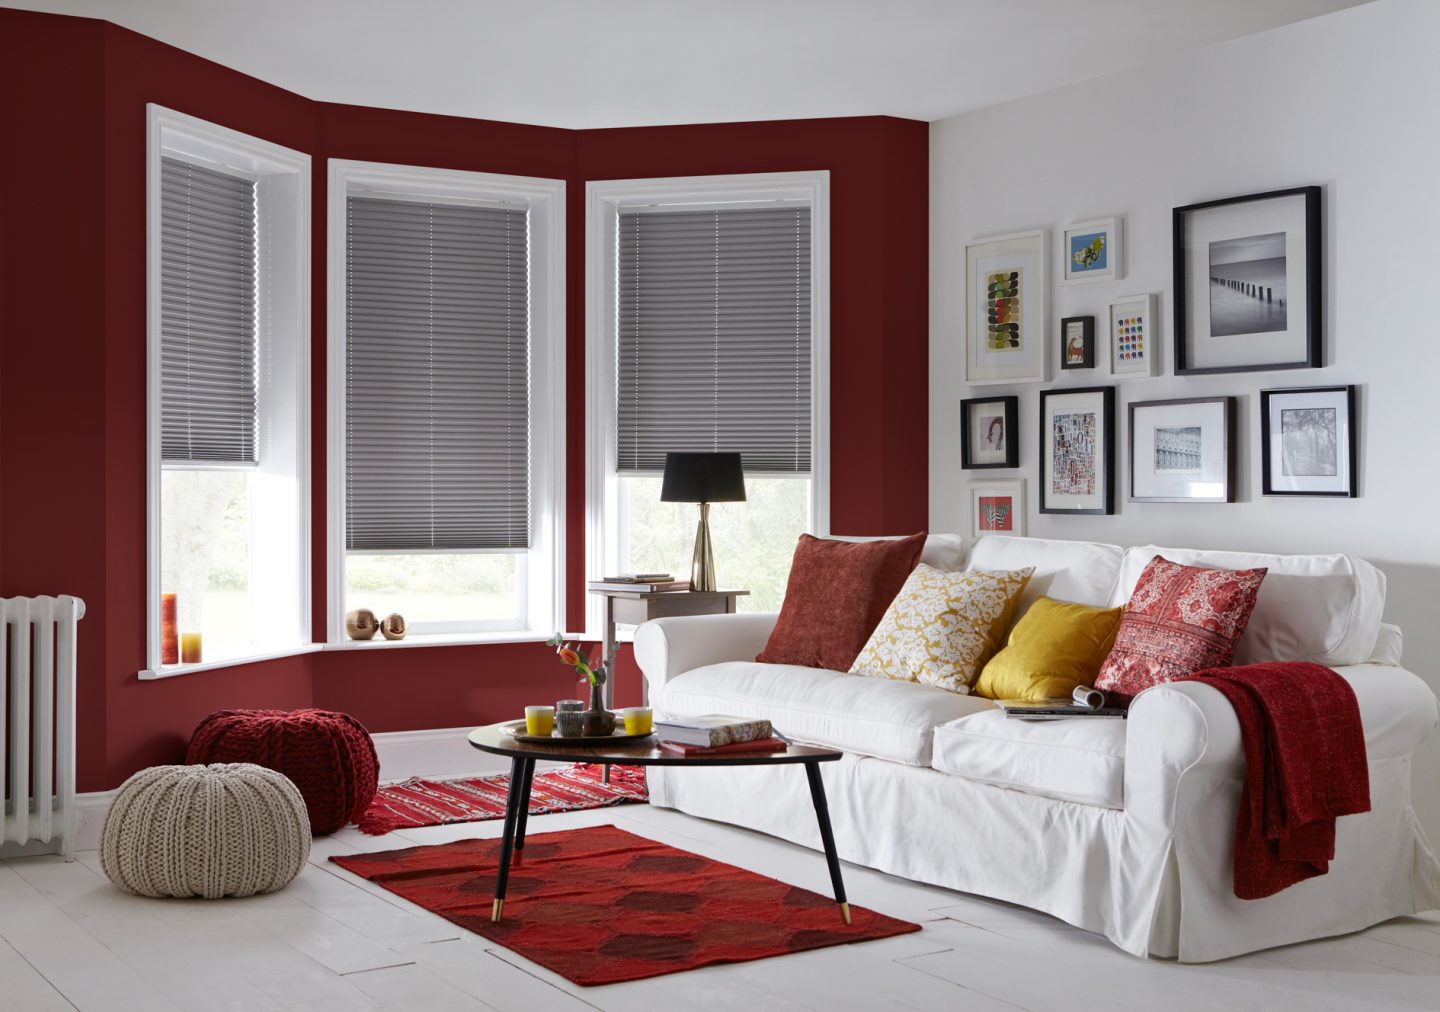 DST Home Decor Inspiration: Crimson and Cream Design Style